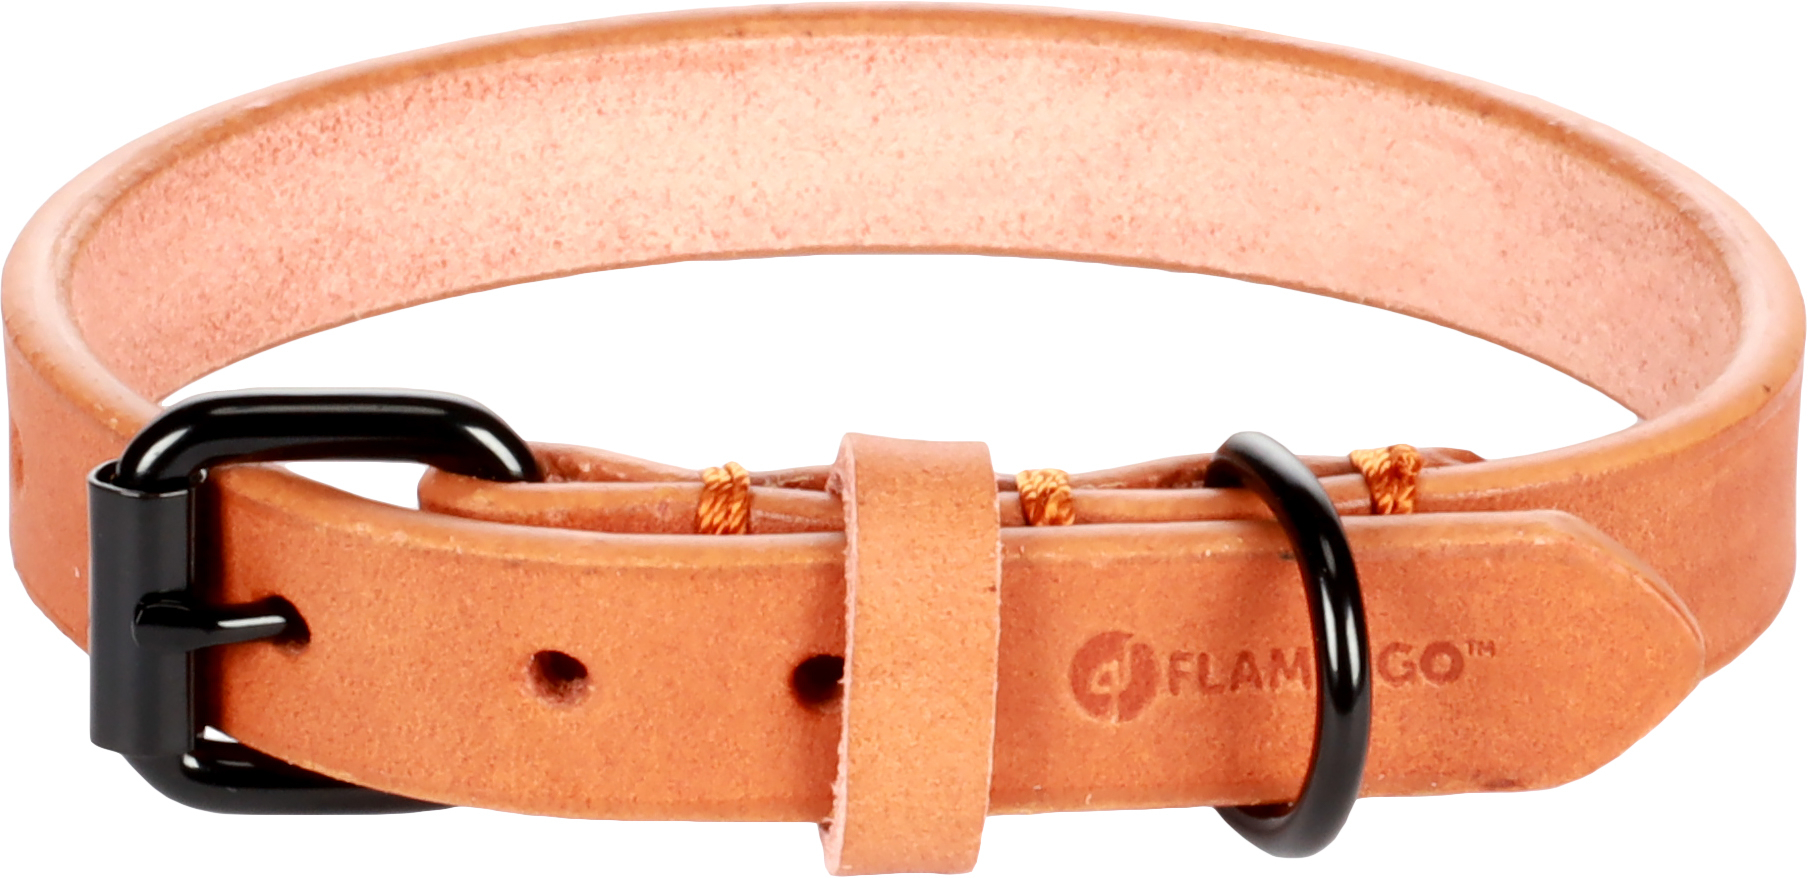 Halsband für Hunde Flamingo LEANO aus echtem Leder Cognac